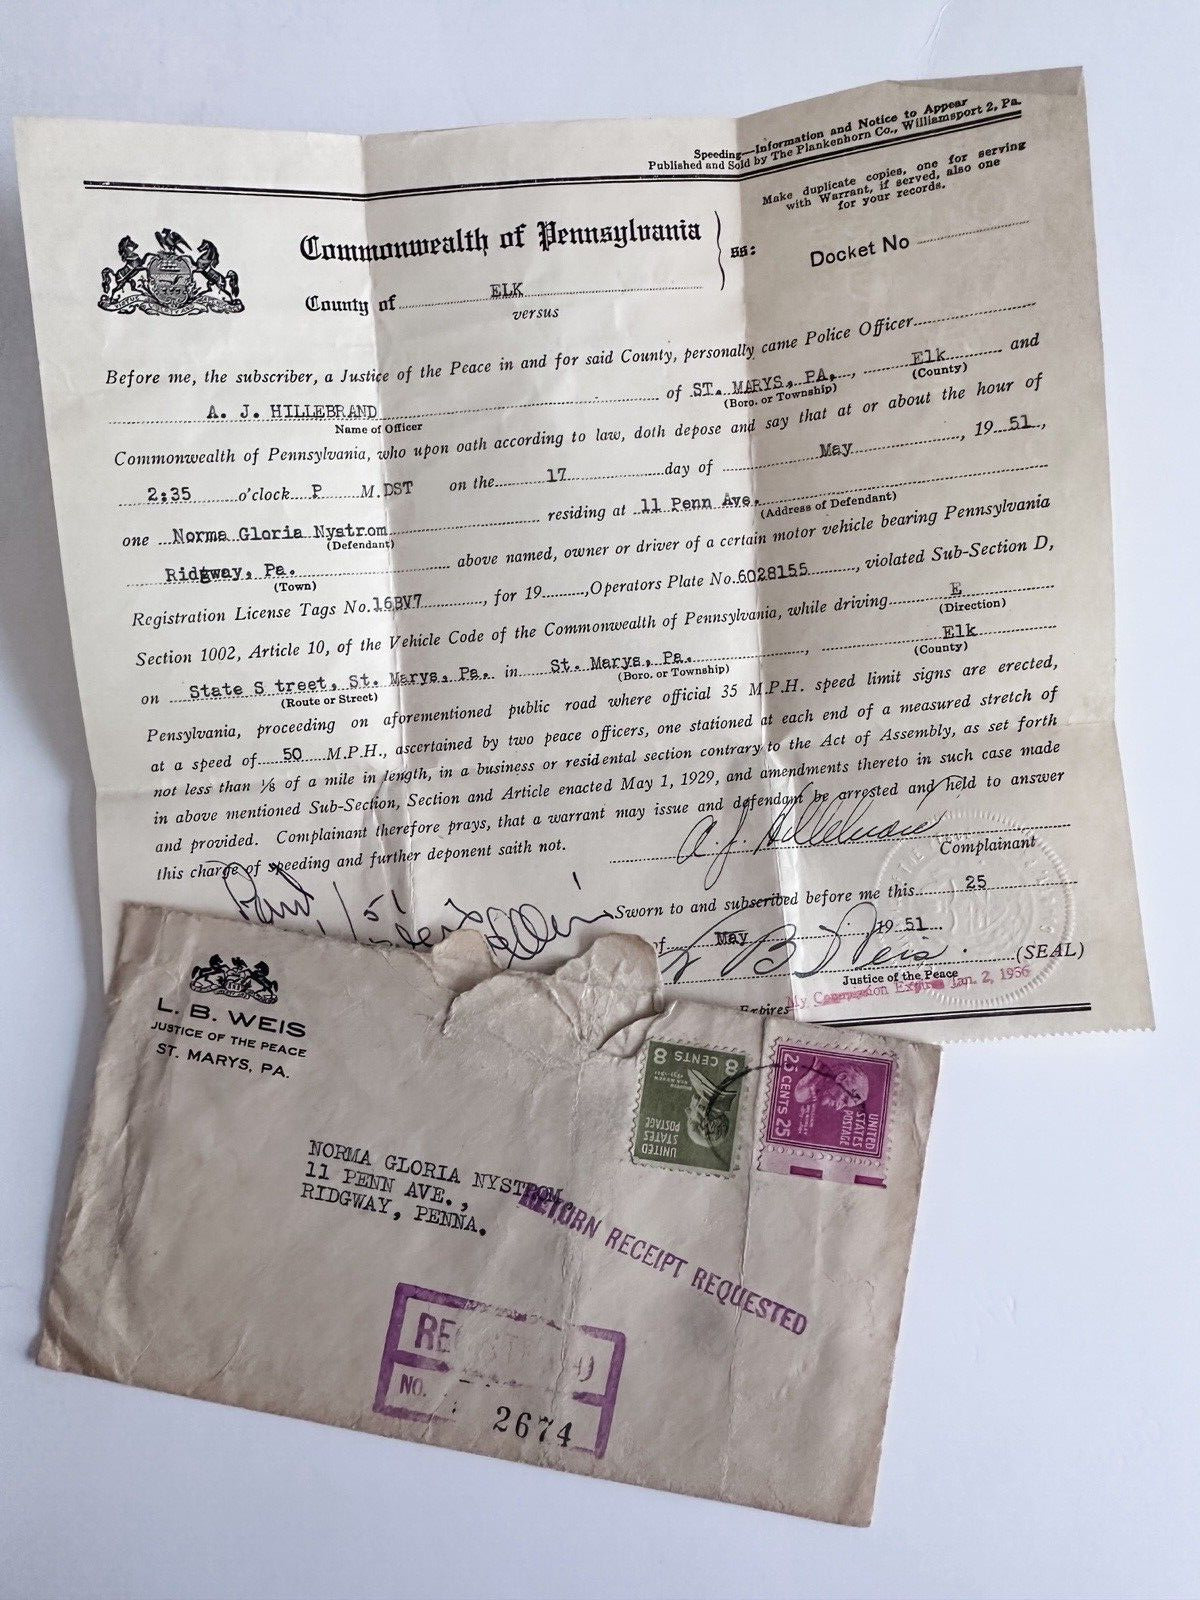 1951 Pennsylvania Speeding Ticket 50 in 35mph w/ Envelope Summons Police Officer